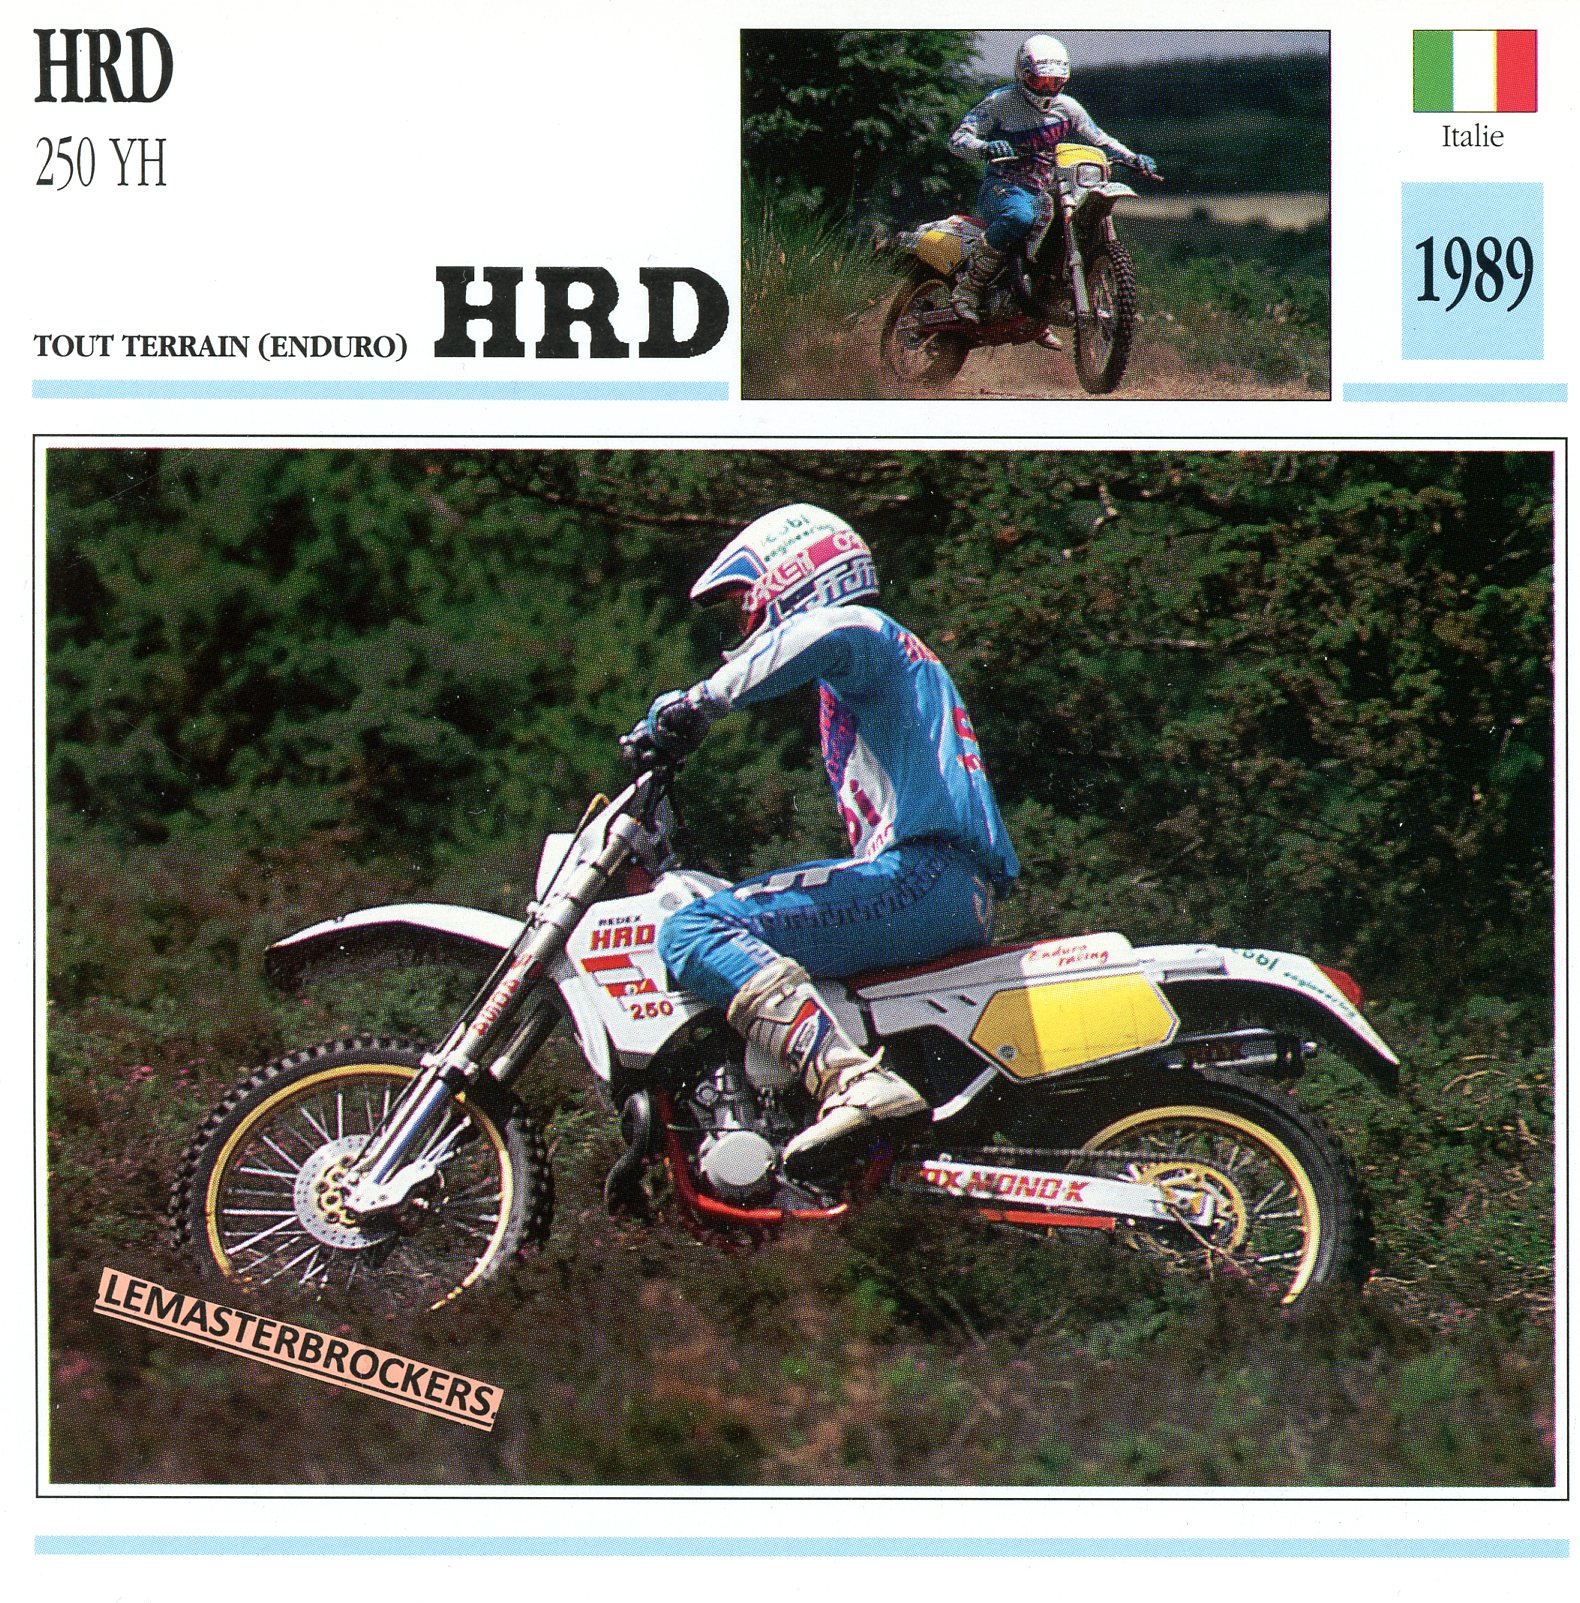 HRD-250-YH-1989-FICHE-MOTO-ATLAS-lemasterbrockers-CARD-MOTORCYCLE